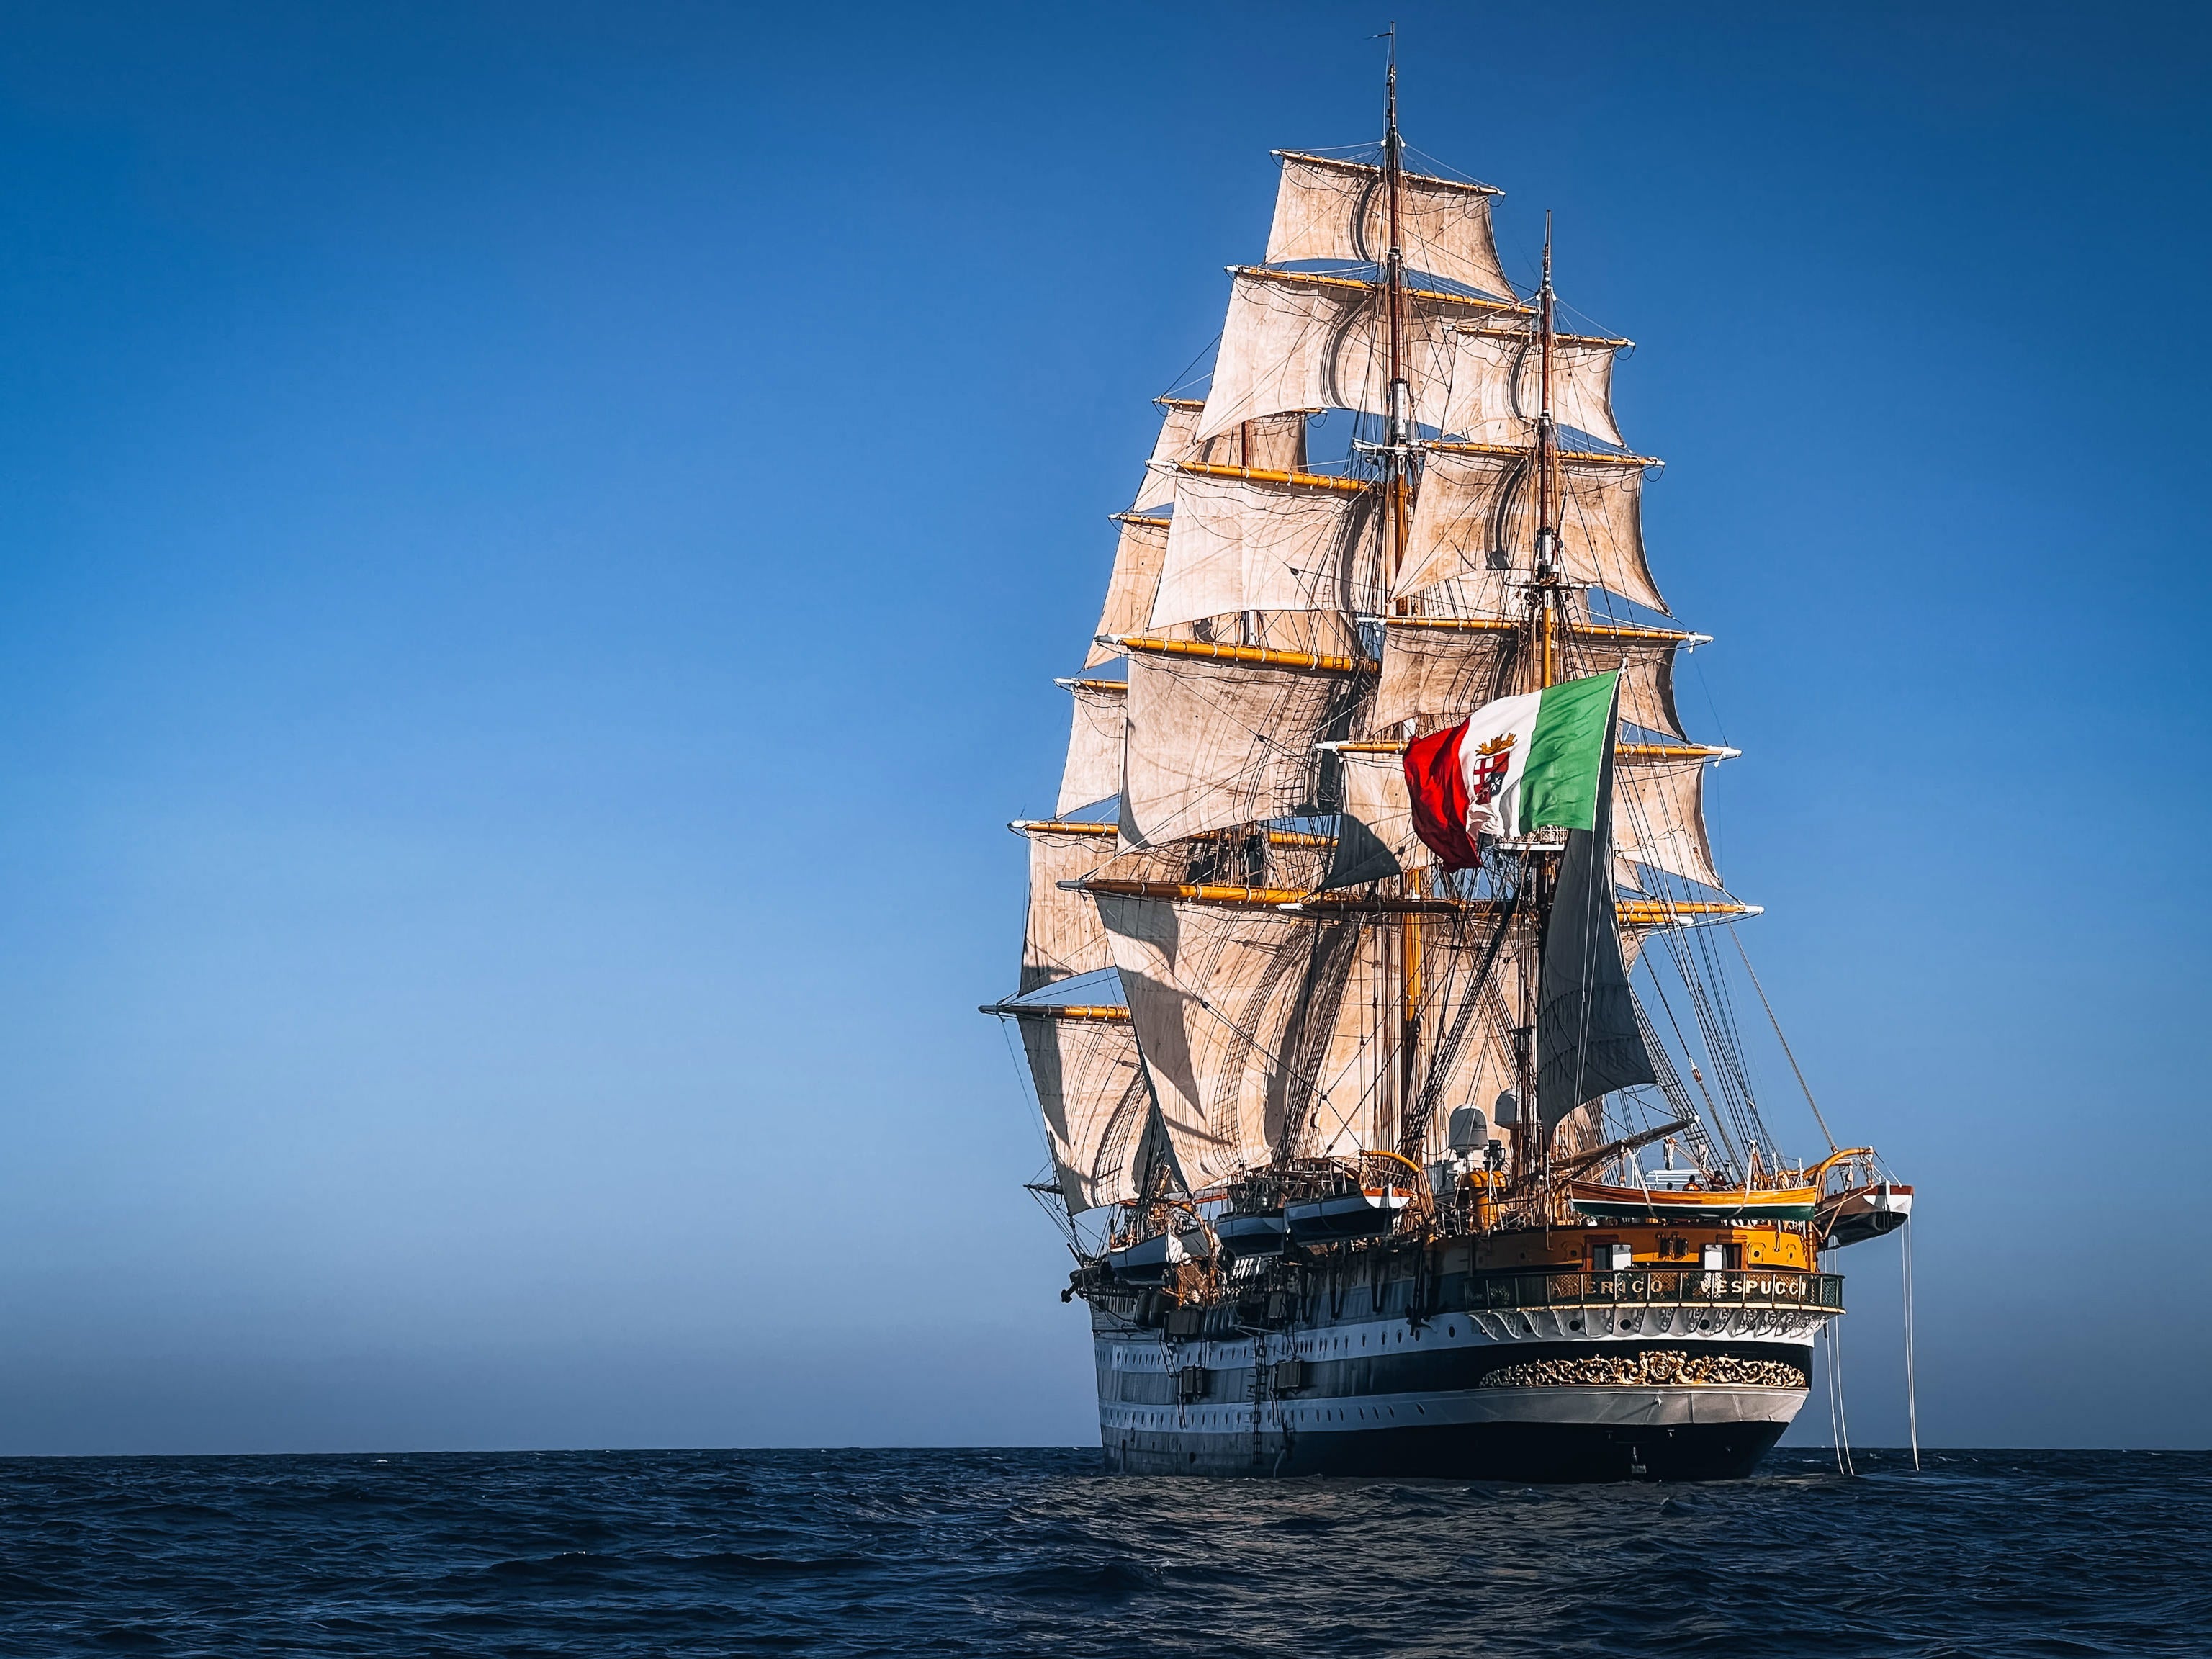 The Italian ship Amerigo Vespucci leaving from Genoa on world tour